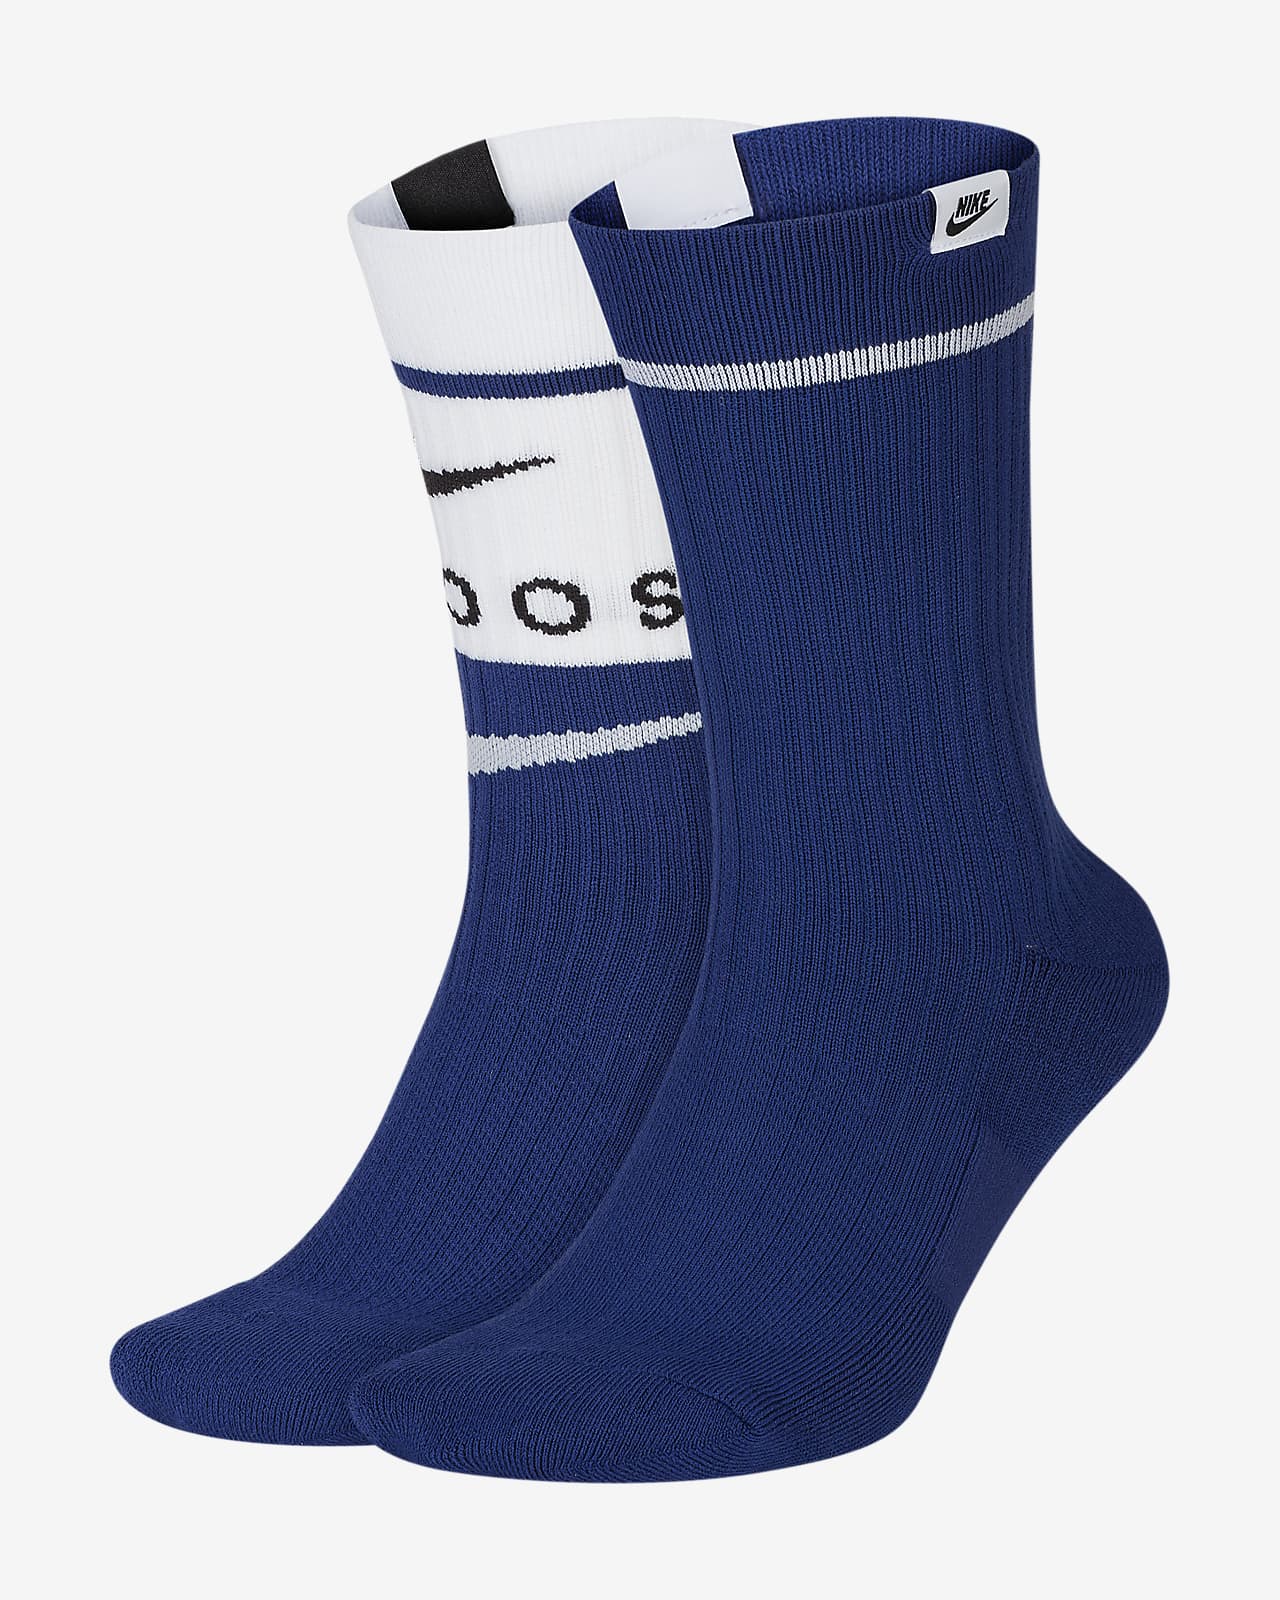 Nike SNKR Sox Crew Socks (2 Pairs). Nike.com